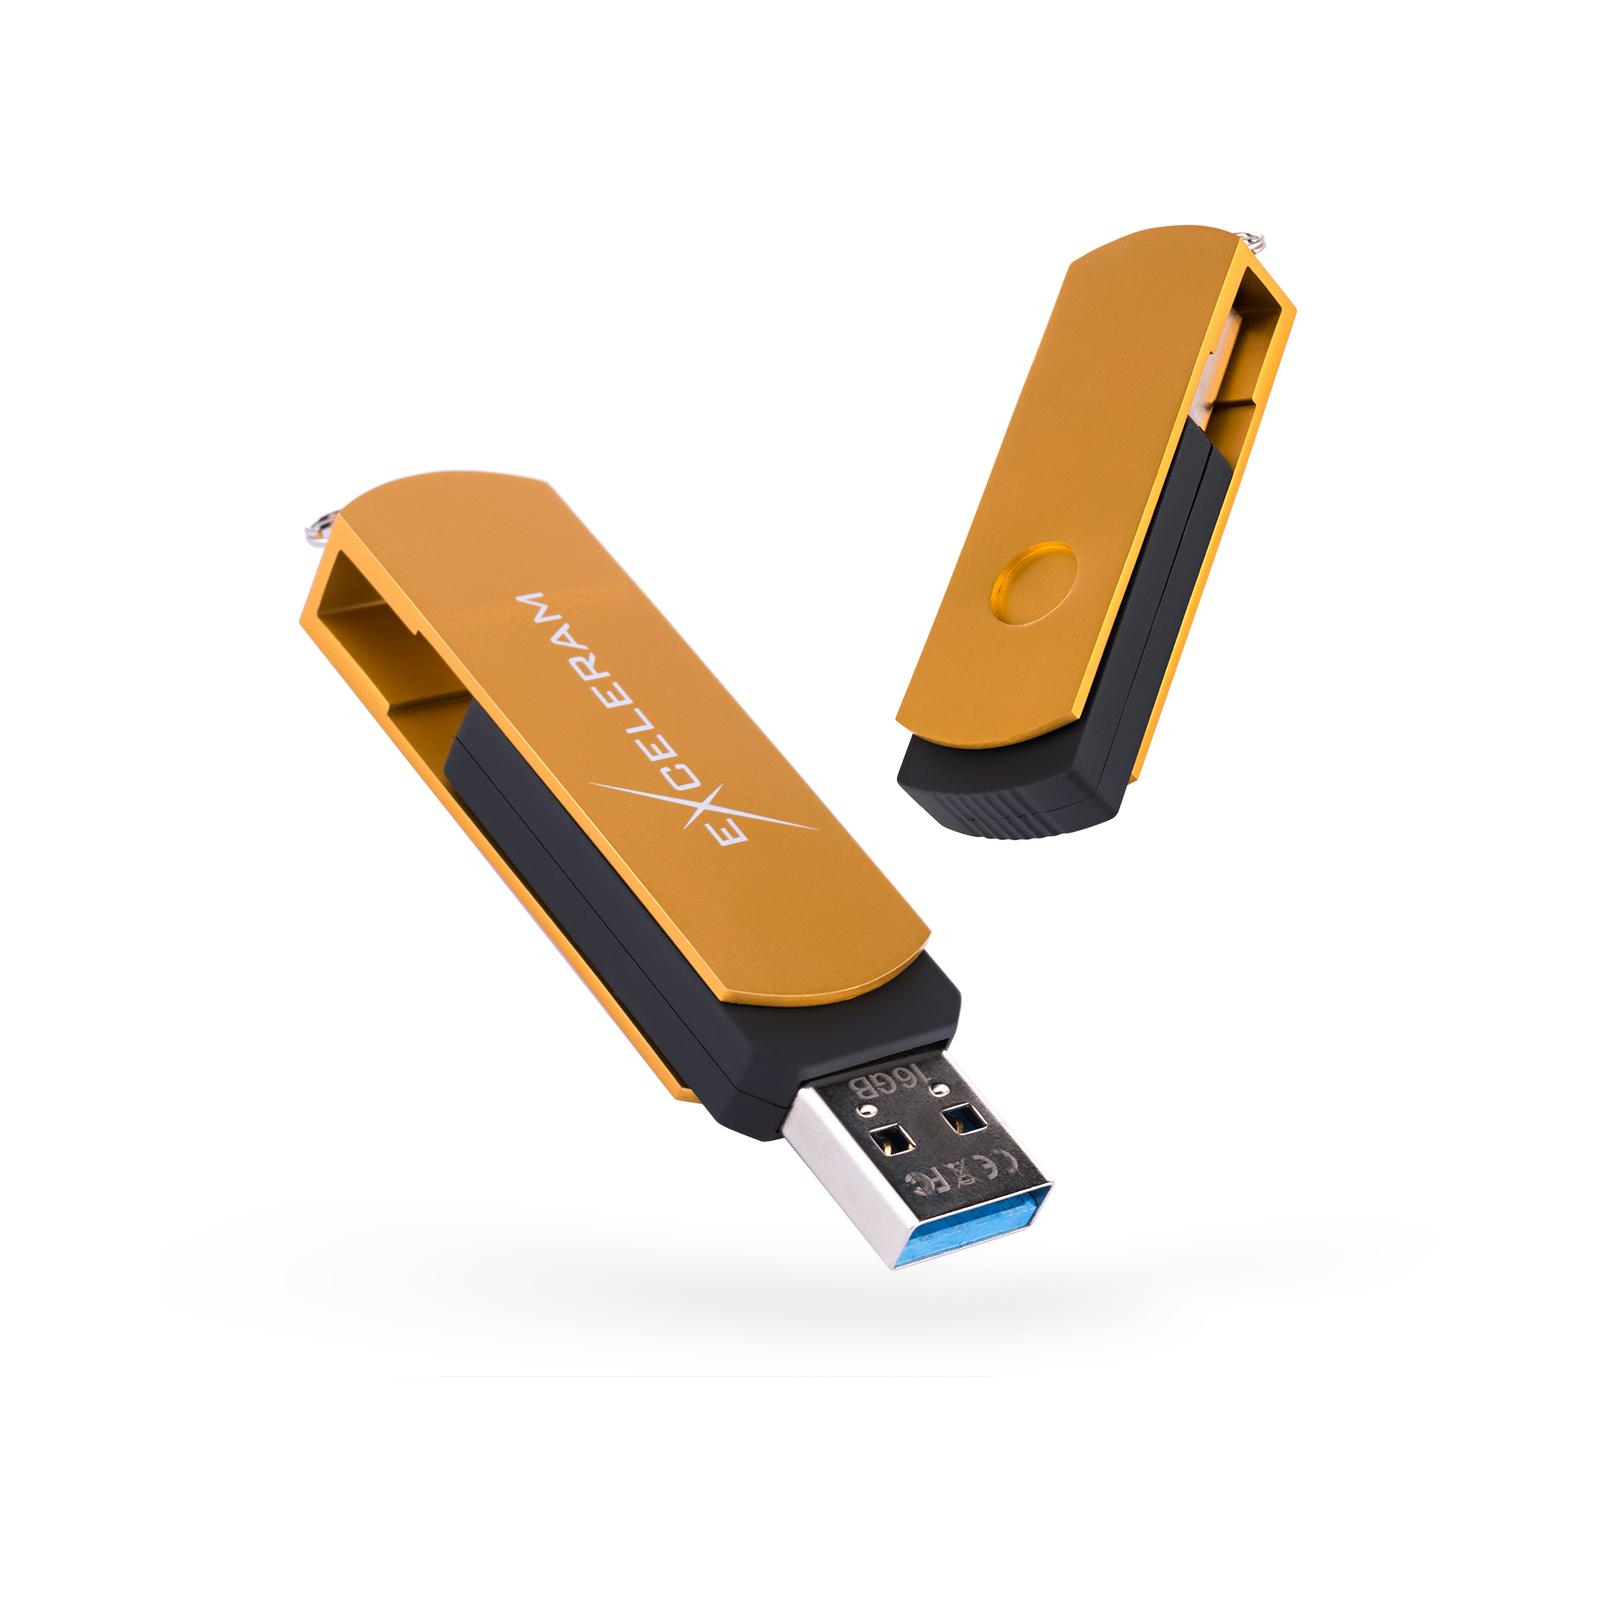 USB флеш накопитель eXceleram 64GB P2 Series Blue/Black USB 3.1 Gen 1 (EXP2U3BLB64)